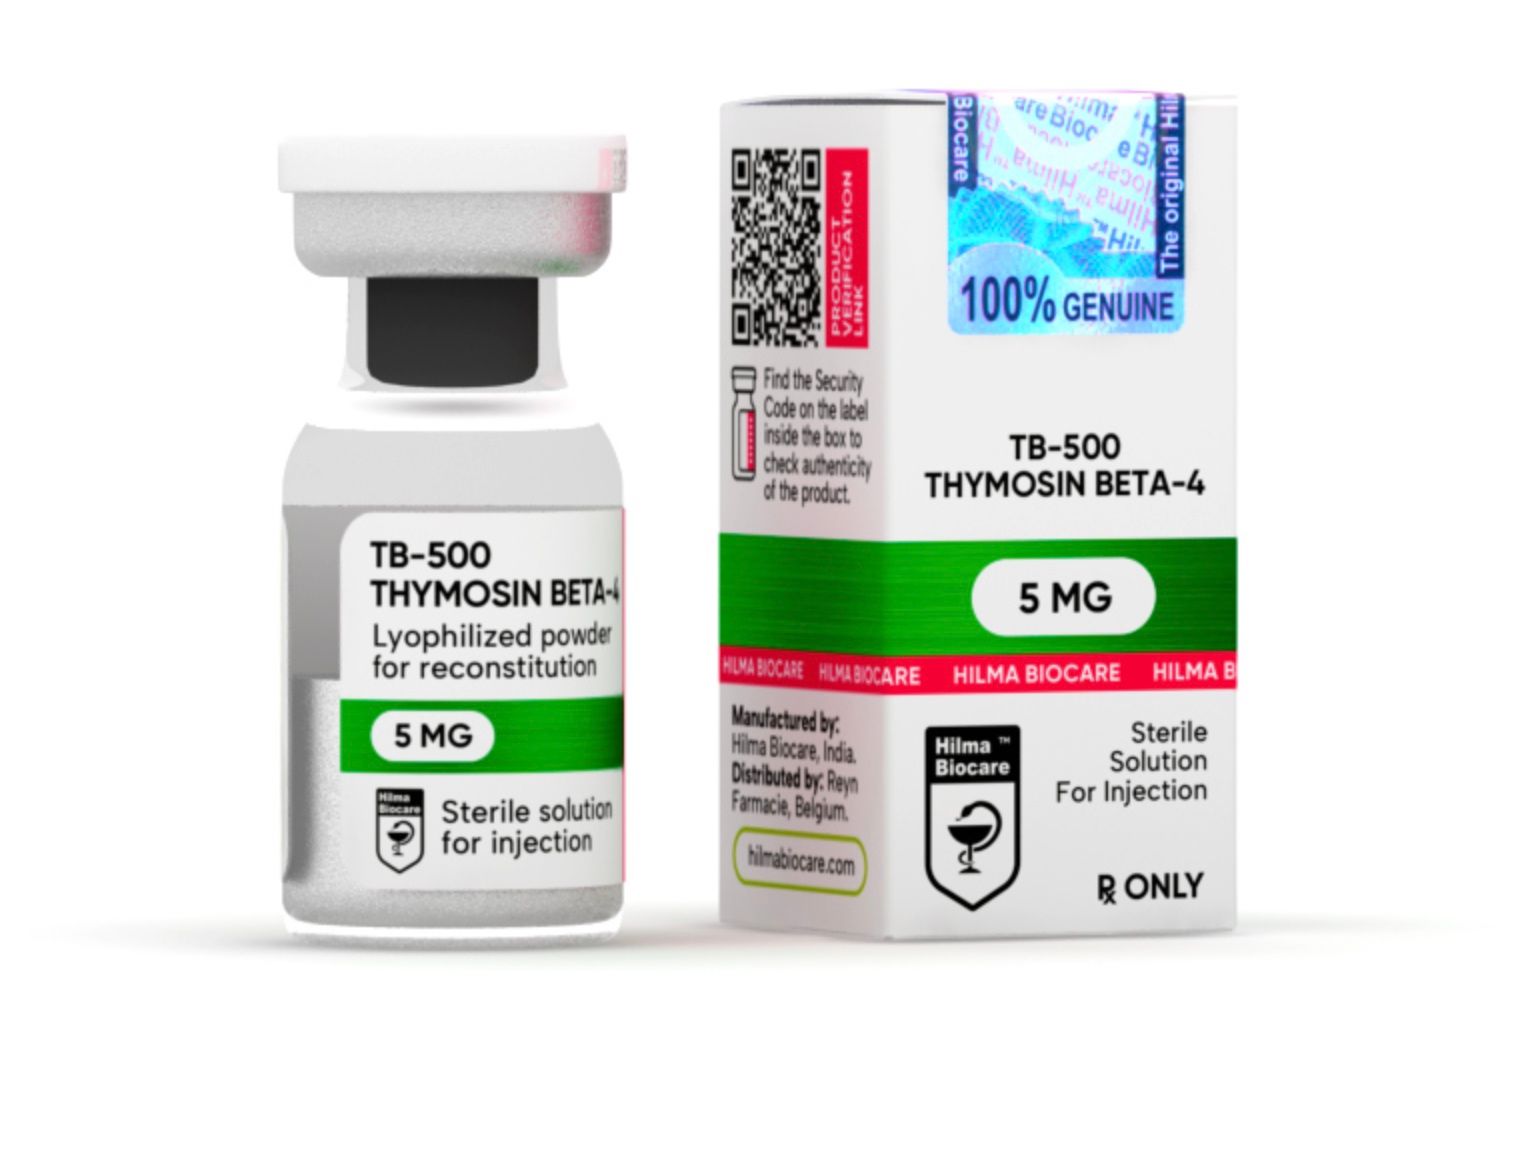 Hilma Biocare TB-500 Thymosin Beta 4 (5mg/vial)